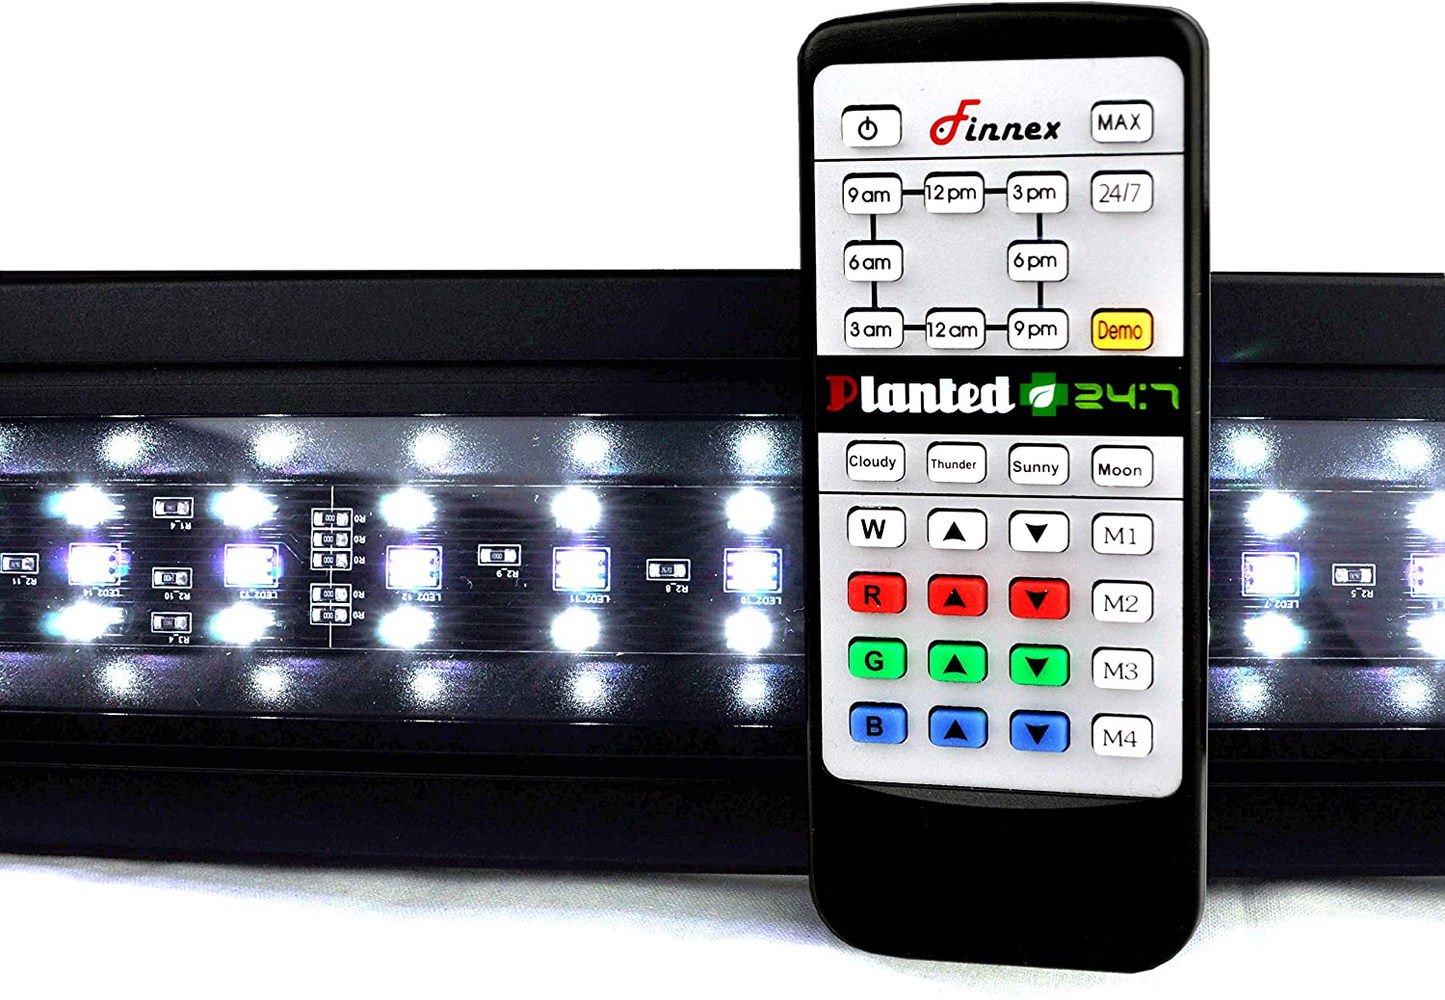 Finnex Planted+ 24/7 LED KLC Aquarium LED Light, Automated Full Spectrum Fish Tank Light, 20 Inch, Blue / Red, (KL-C20A)